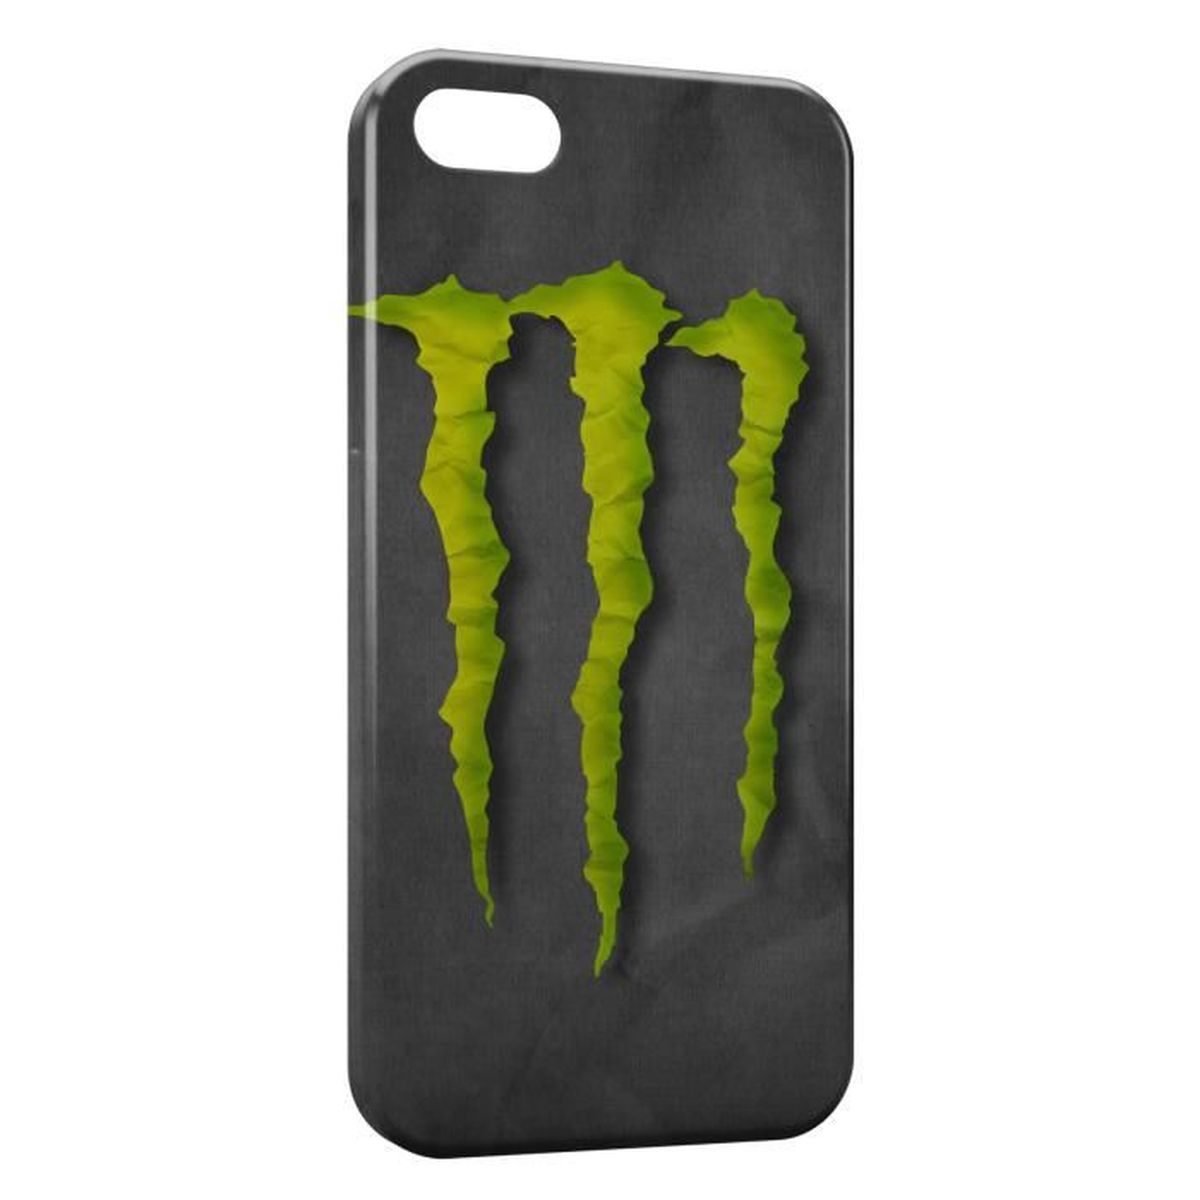 iphone 6 coque monster